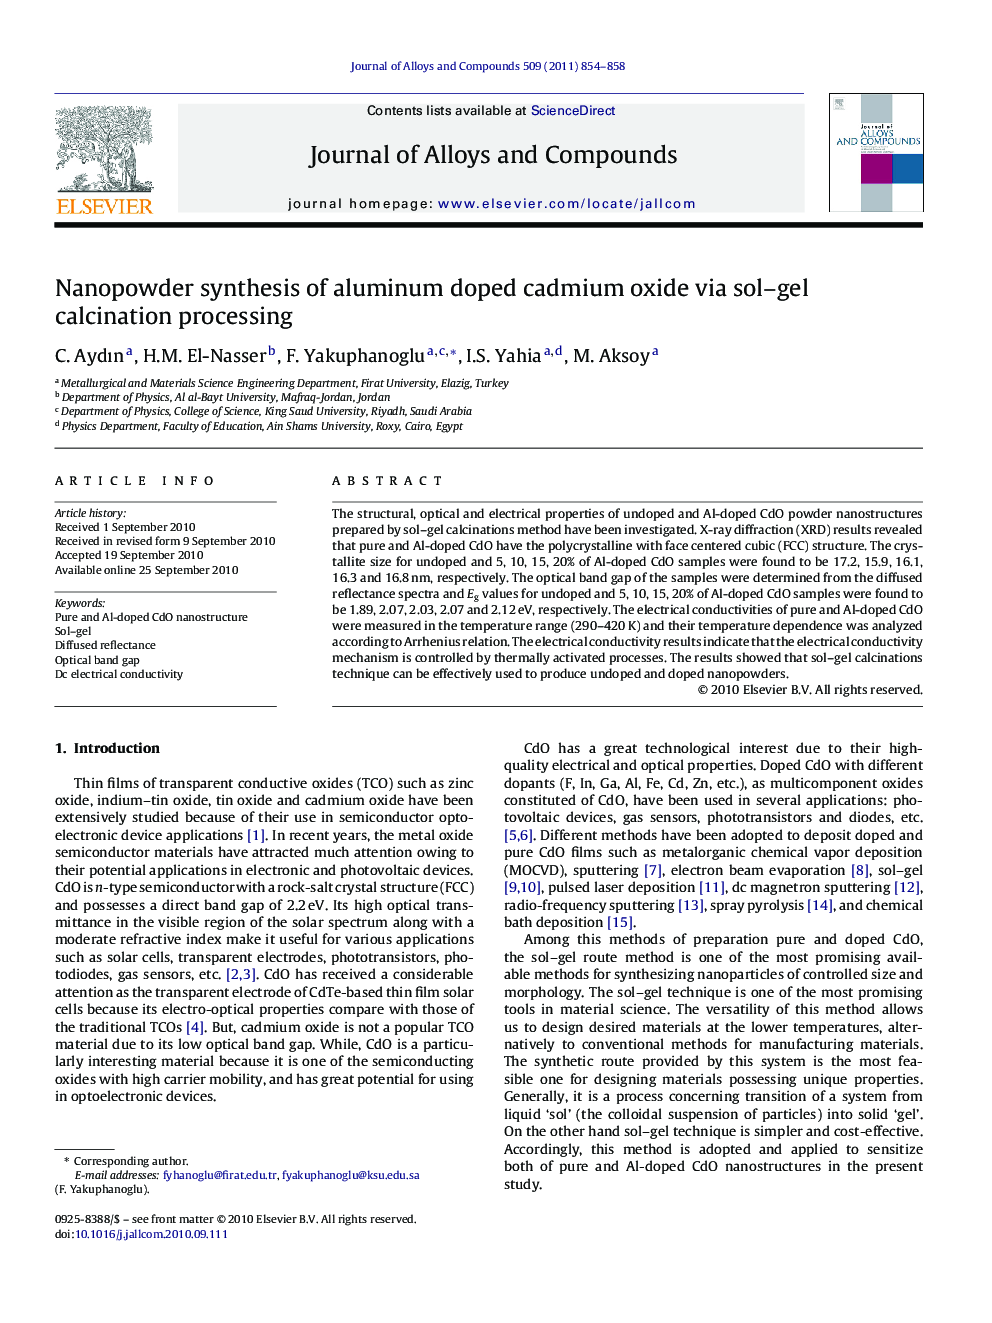 Nanopowder synthesis of aluminum doped cadmium oxide via sol–gel calcination processing